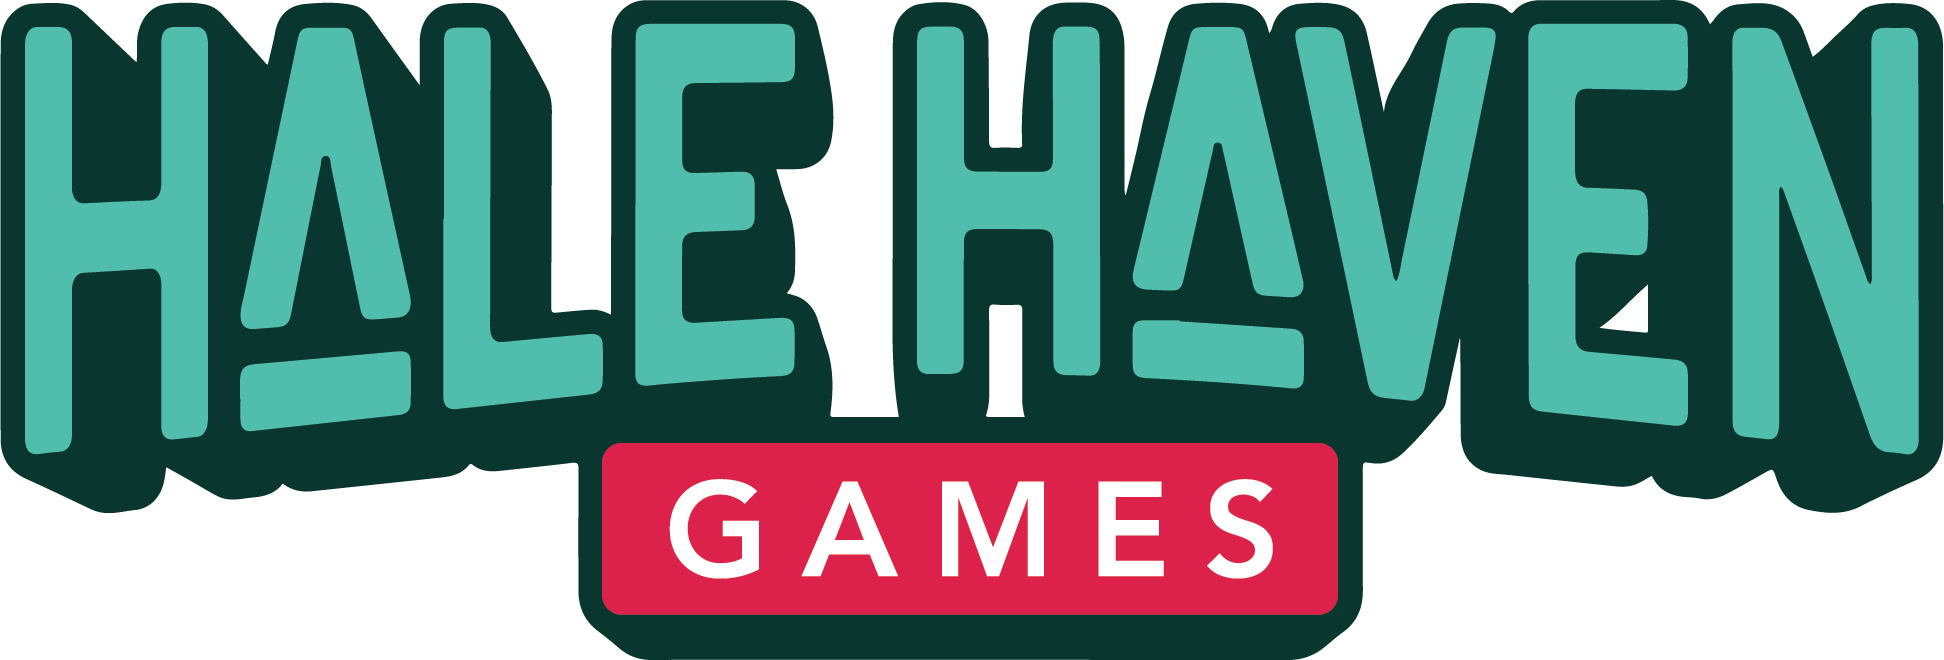 Hale Haven Games logo